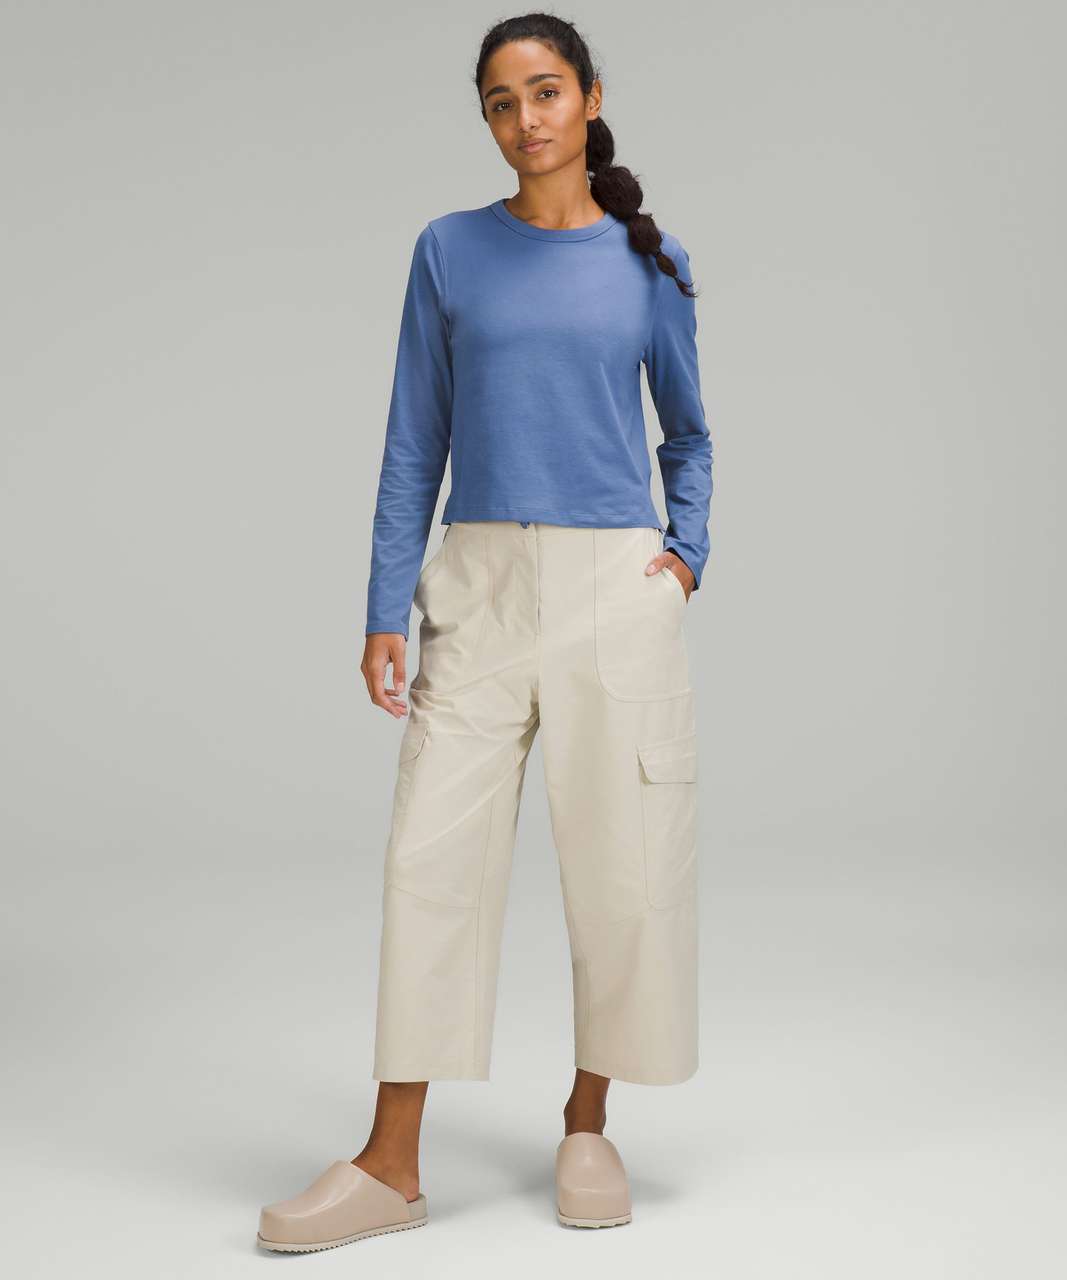 Lululemon Classic-Fit Cotton-Blend Long Sleeve Shirt - Water Drop